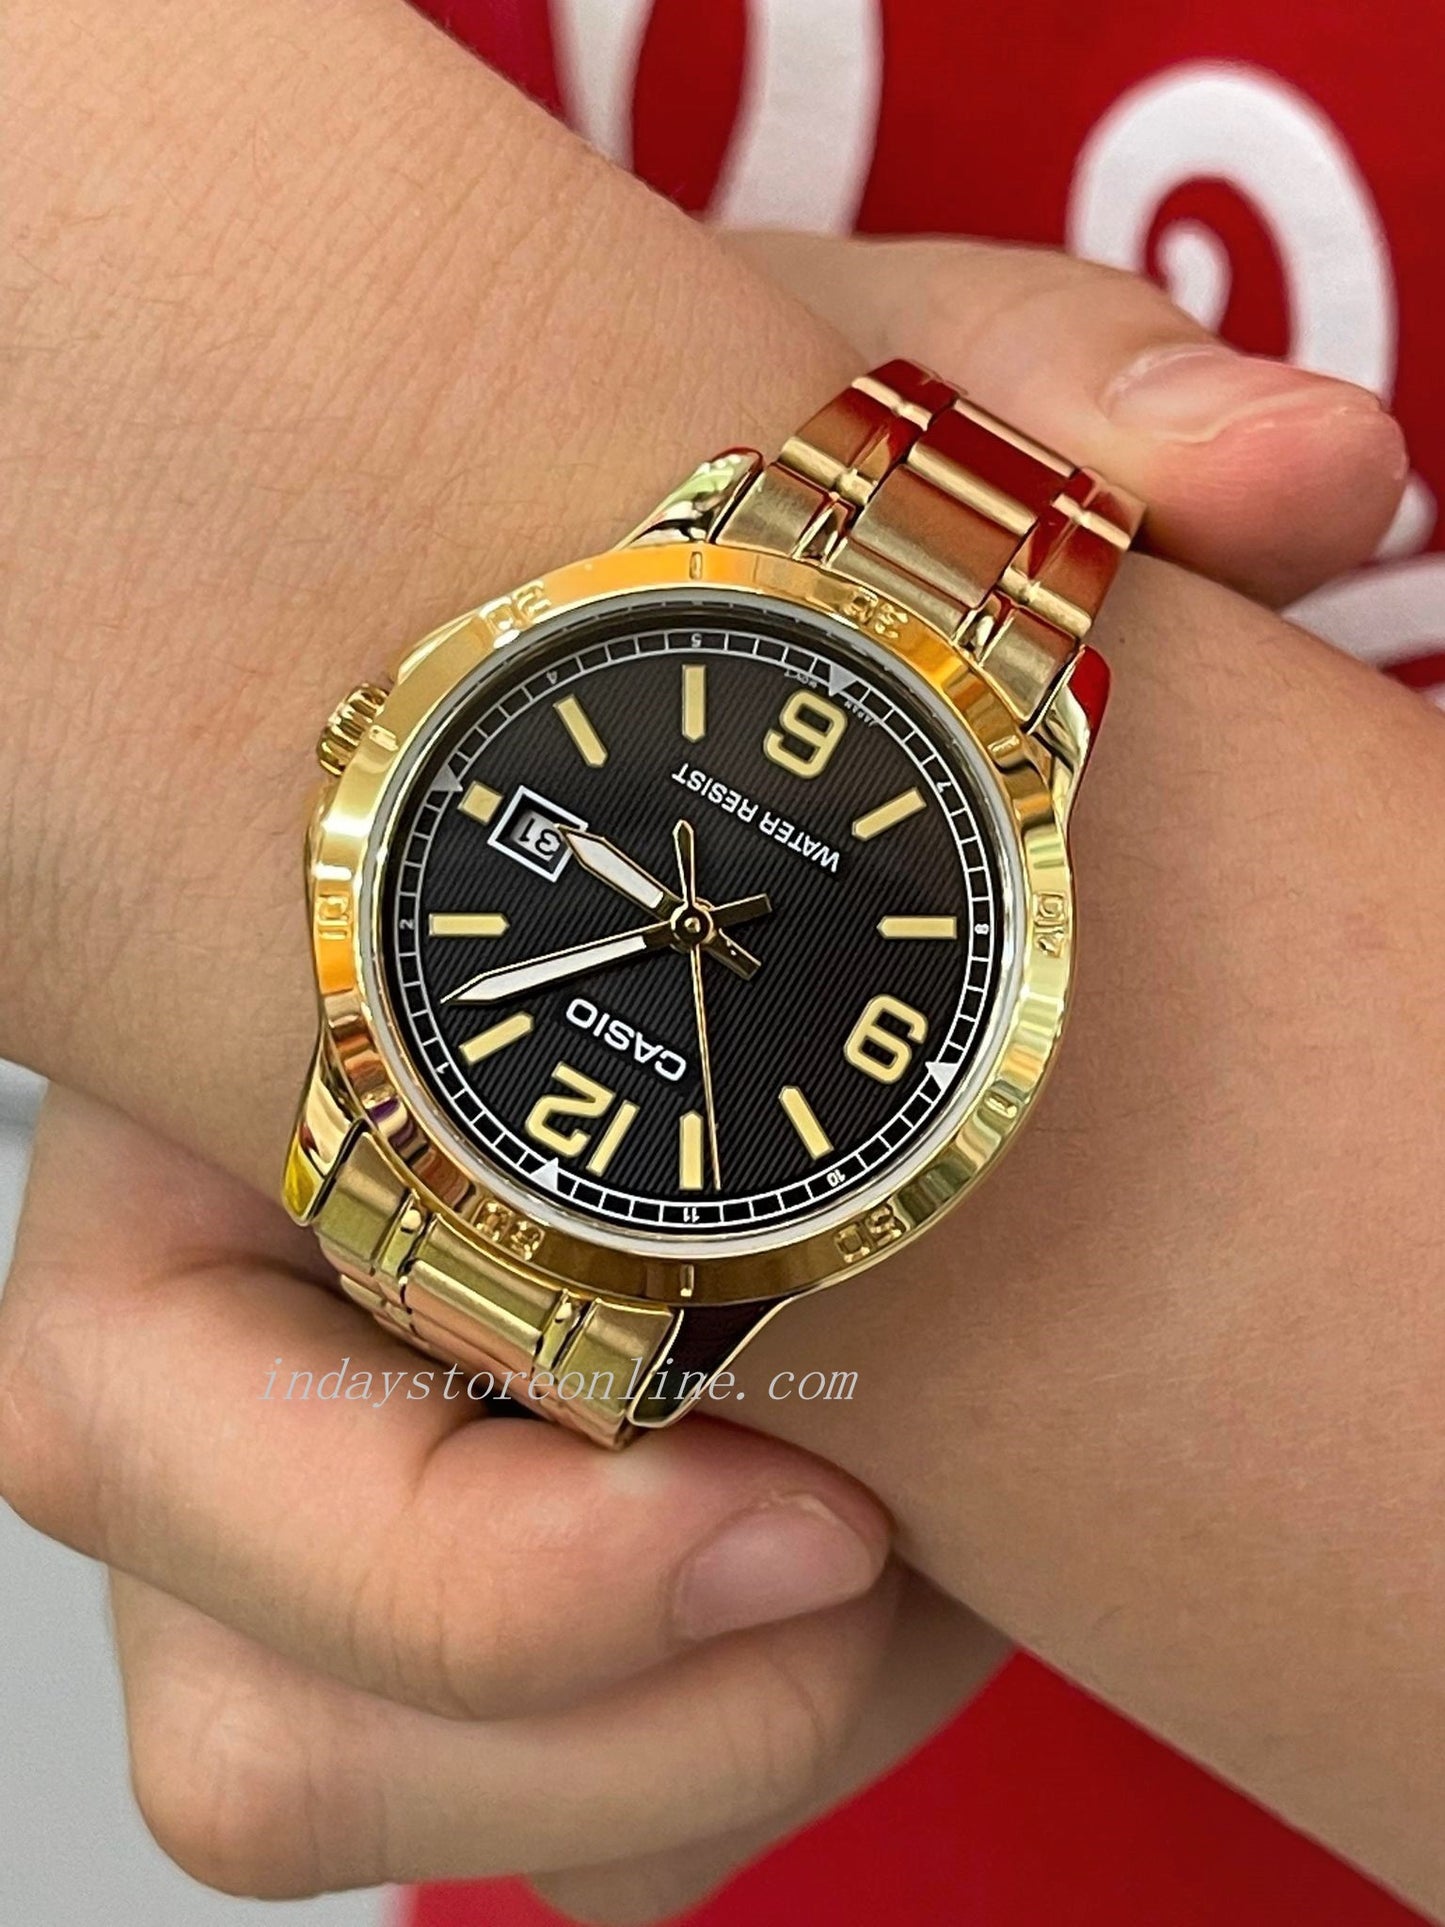 Casio Standard Women's Watch LTP-V004G-1B Gold Plated Stainless Steel Strap